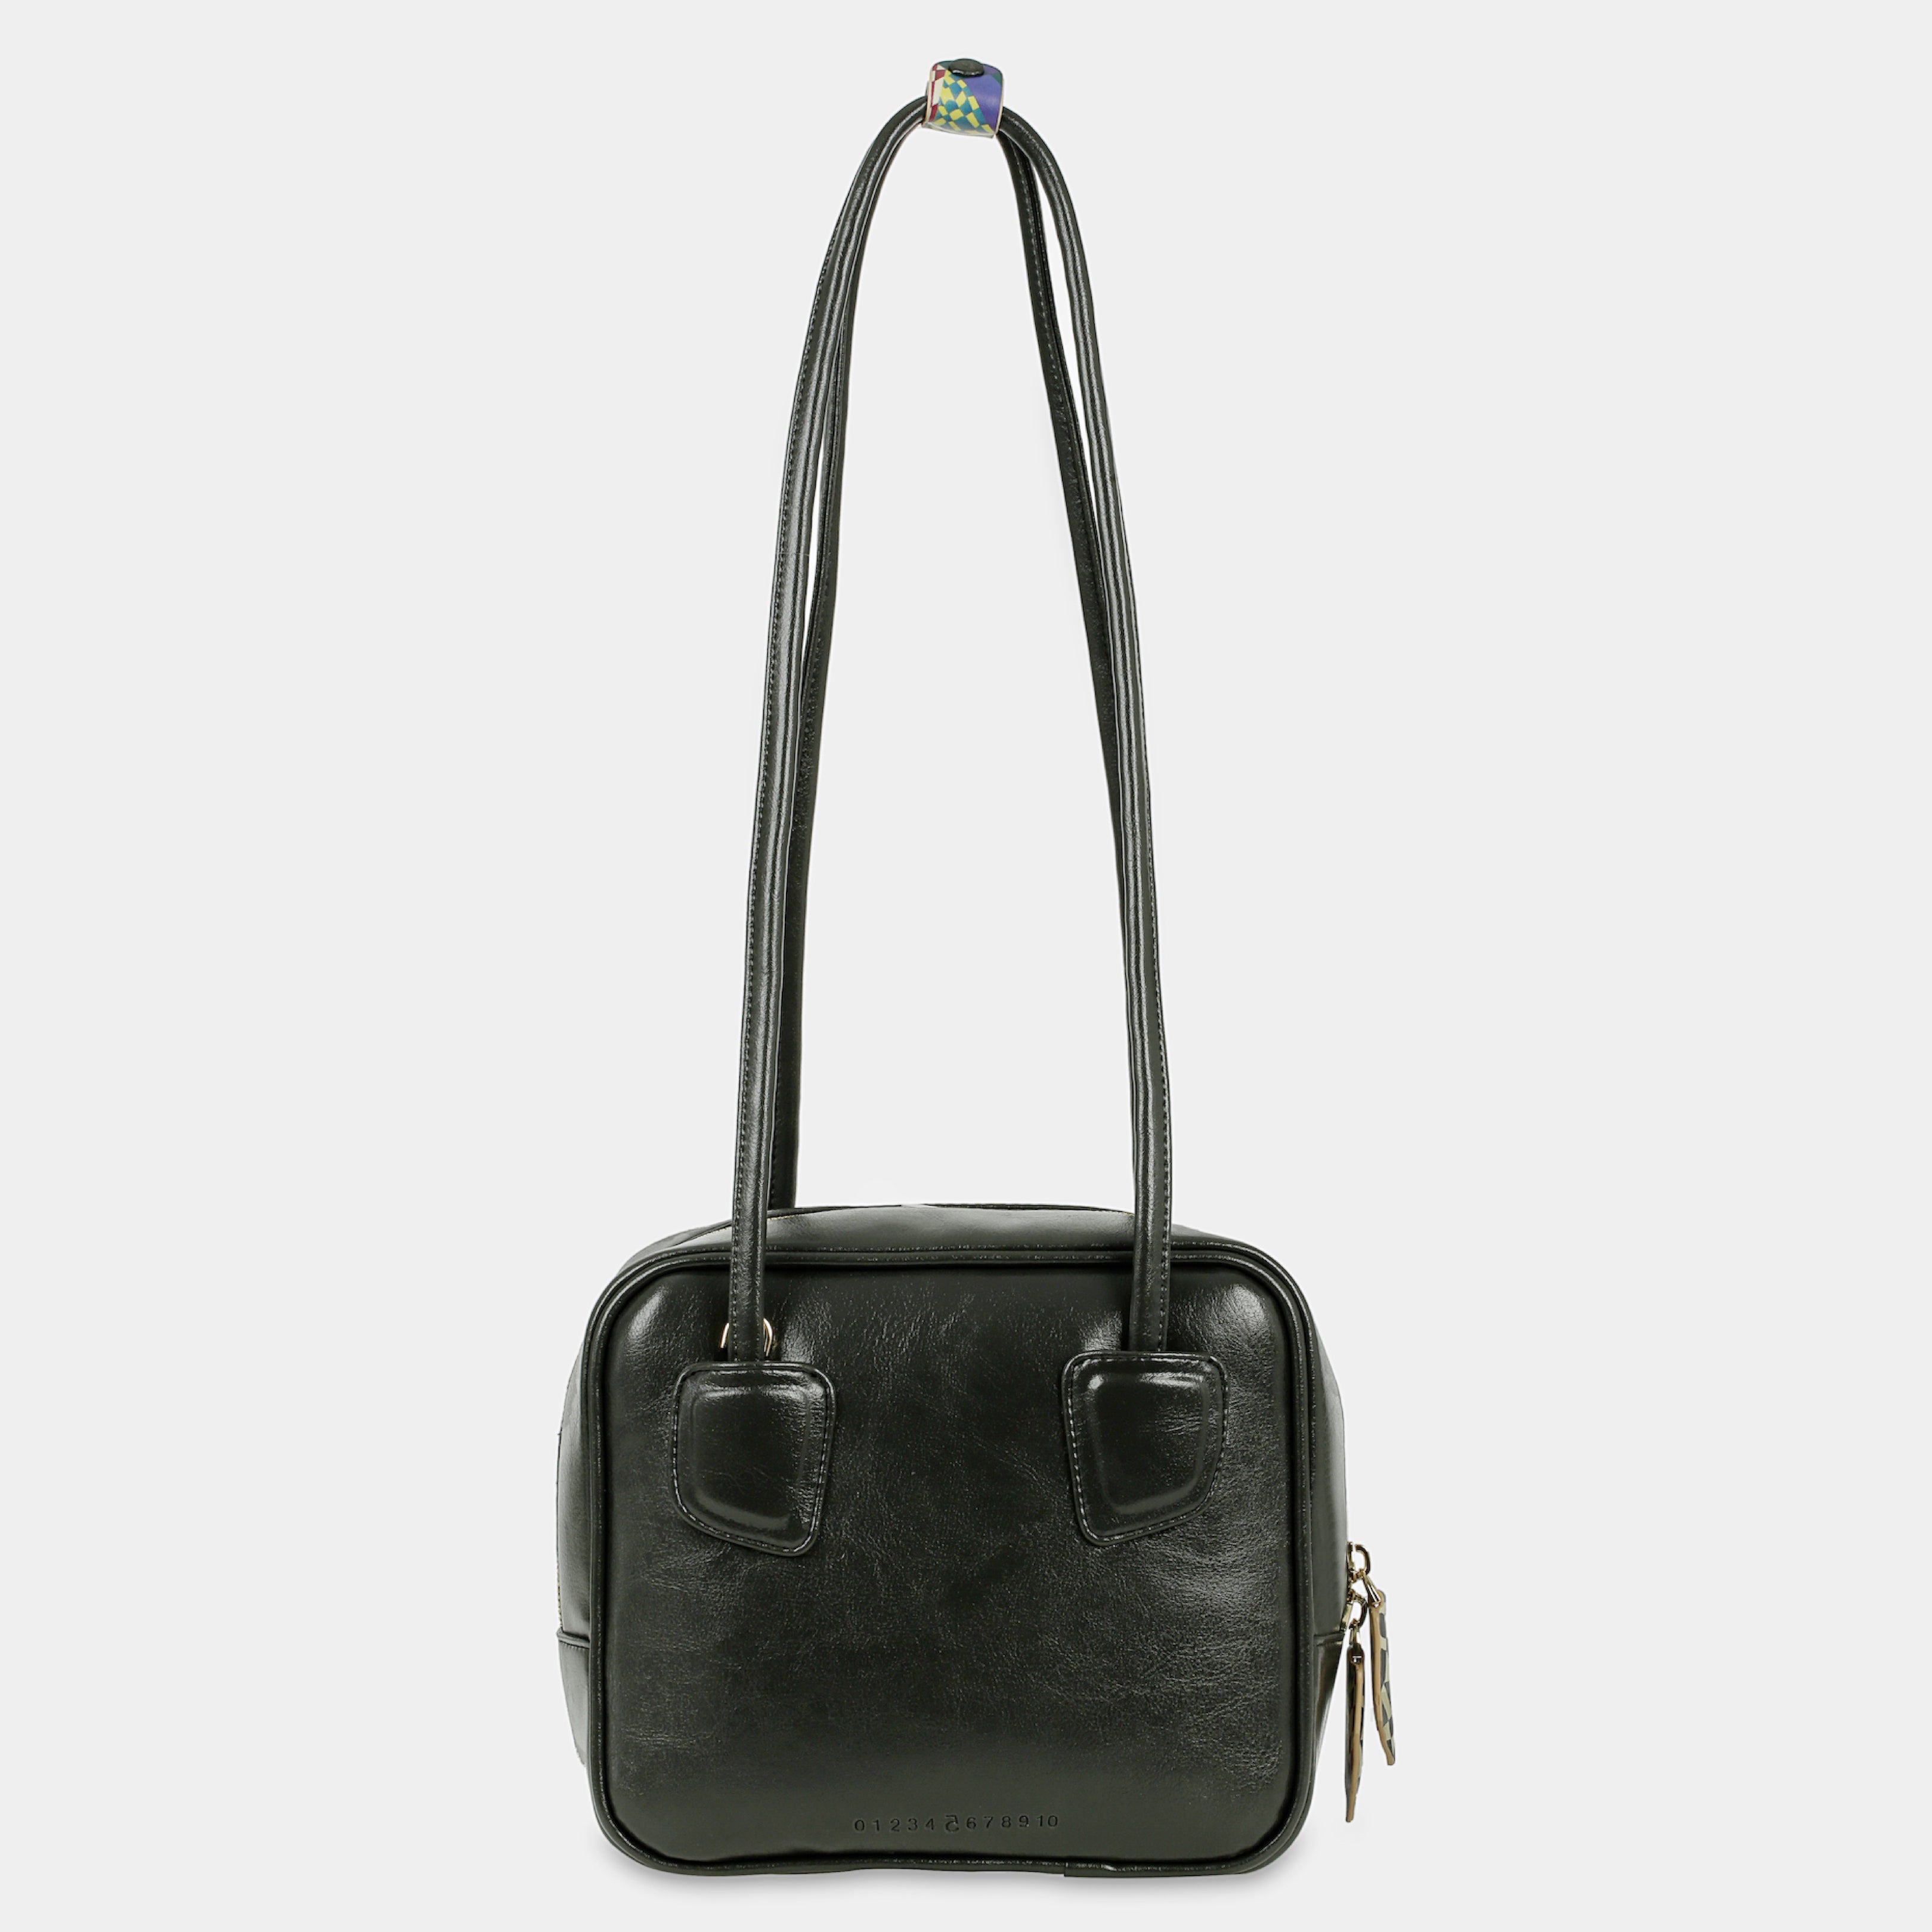 Black SANDWICH handbag